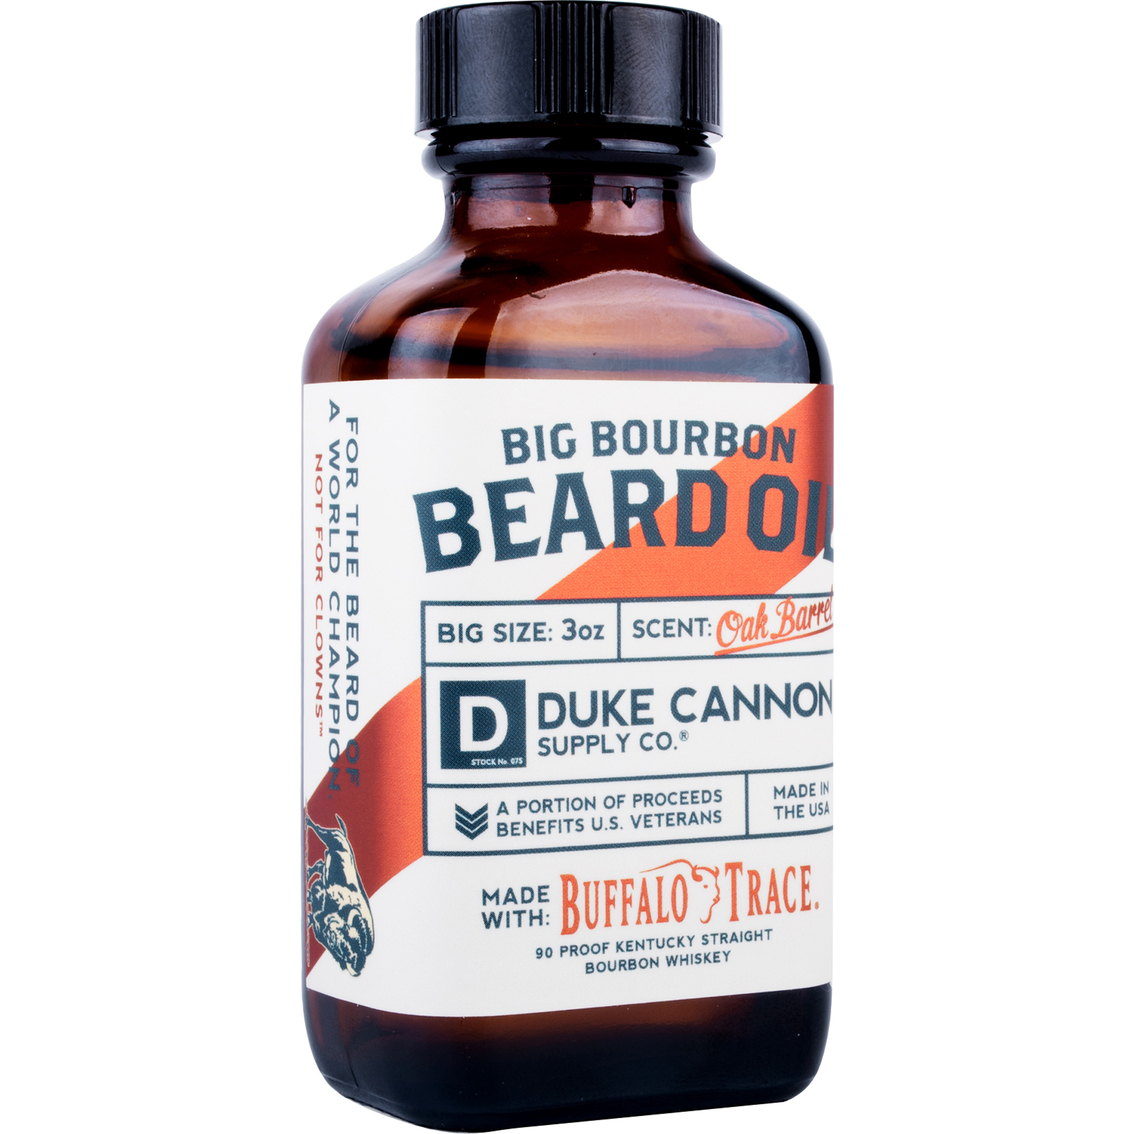 Duke Cannon Big Bourbon Beard Oil - Image 2 of 3